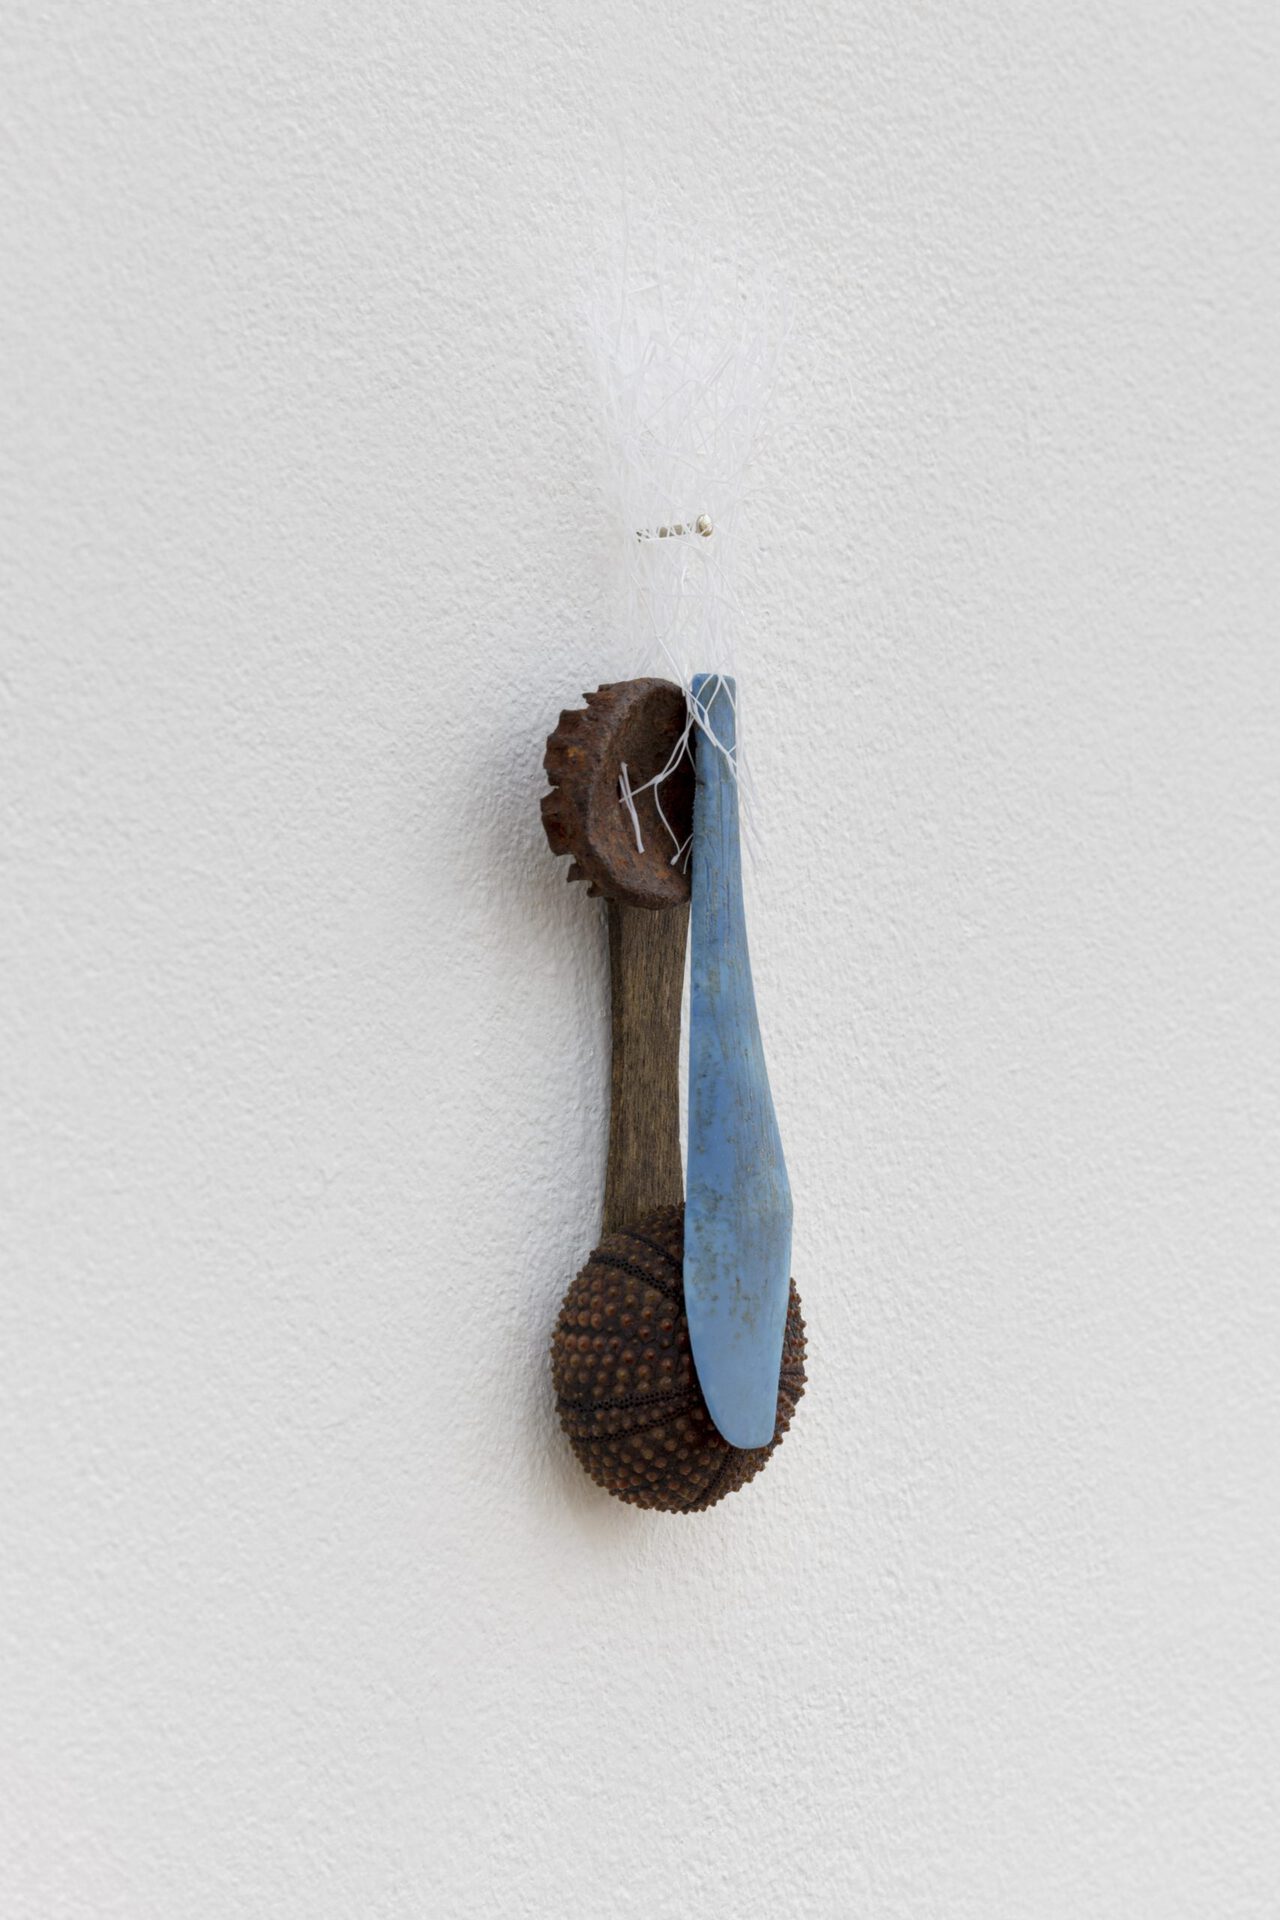 David Fesl, Untitled, 2022, soap sleeve, plastic spoon, popsicle stick, bottle cap, gummy seal, sea urchin shell, 15.4 × 4 × 2 cm